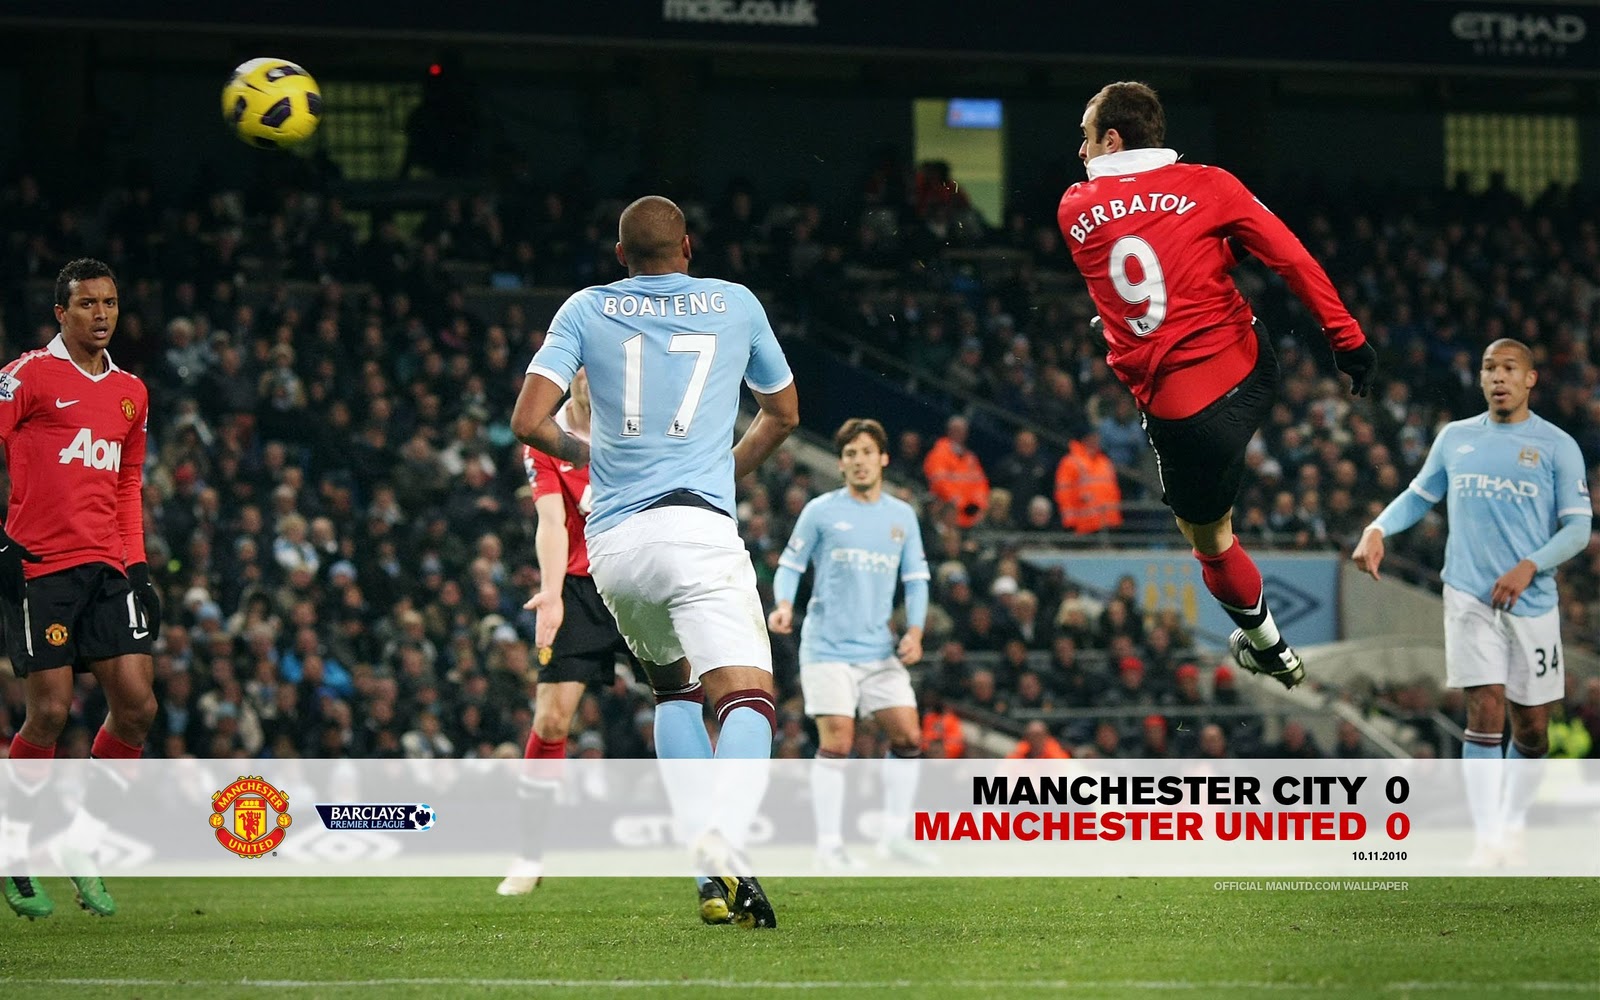 Manchester City Vs Manchester United Wallpaper 2010/11 Man United | Malaysia No. 1 Fan1600 x 1000